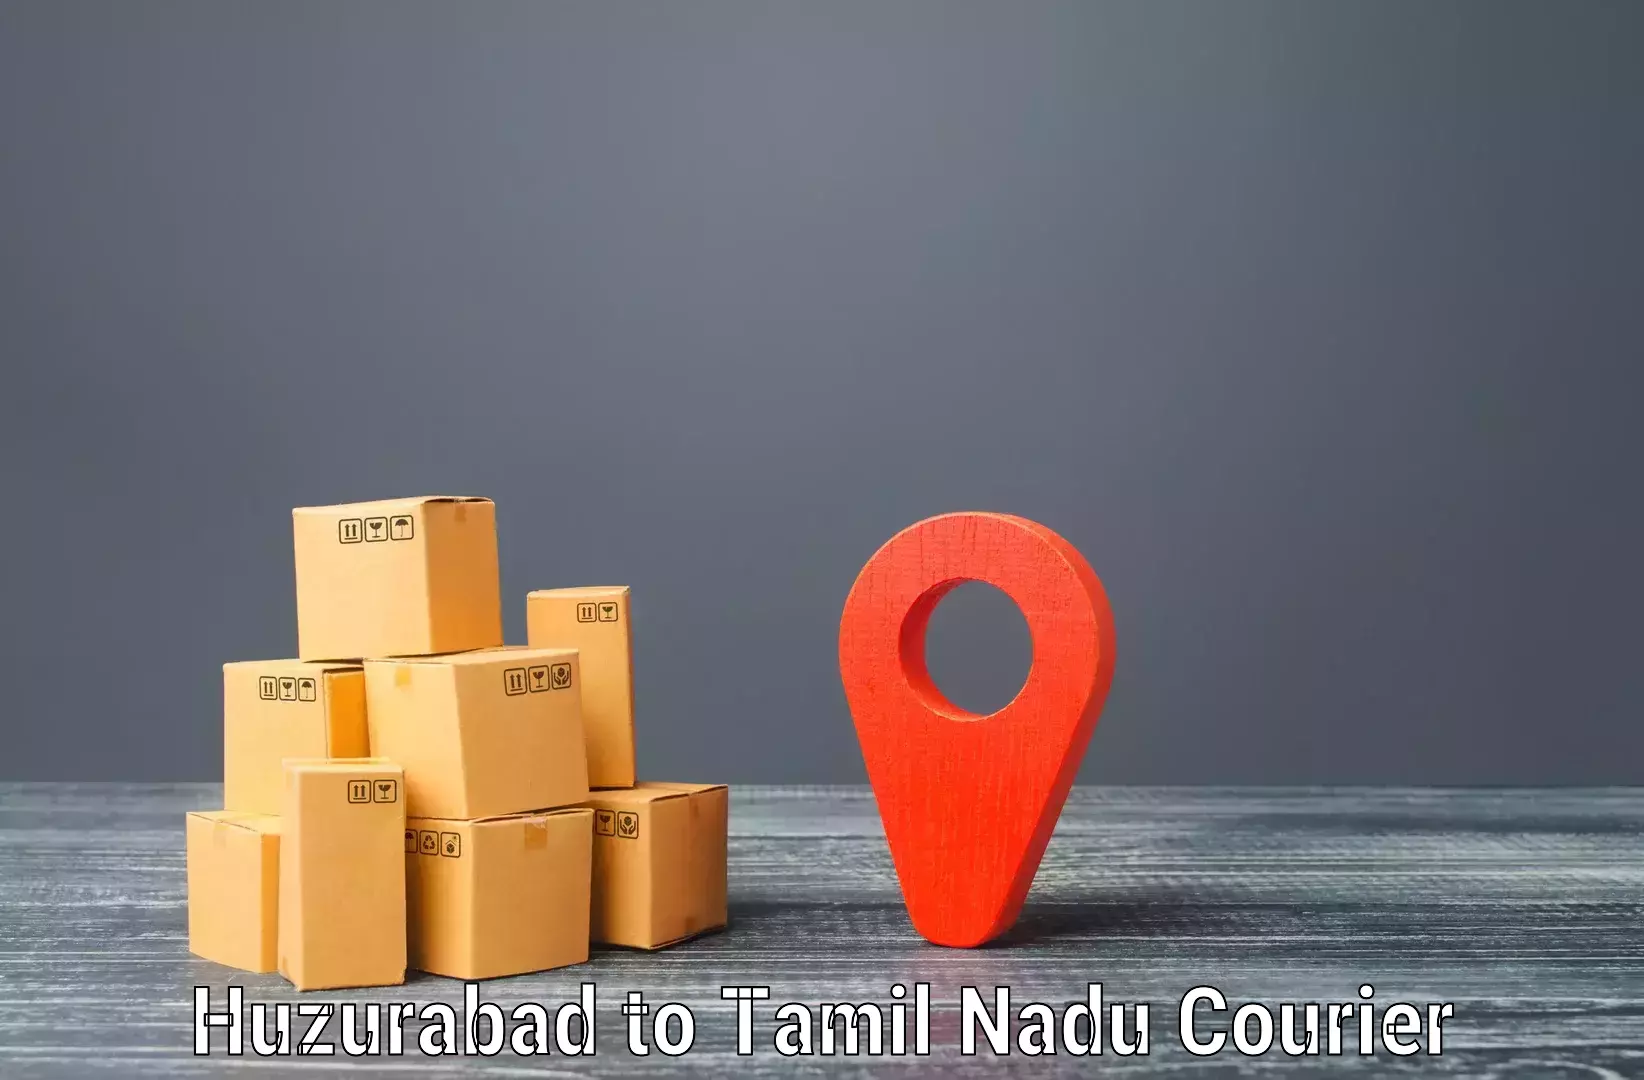 Specialized shipment handling Huzurabad to Avadi